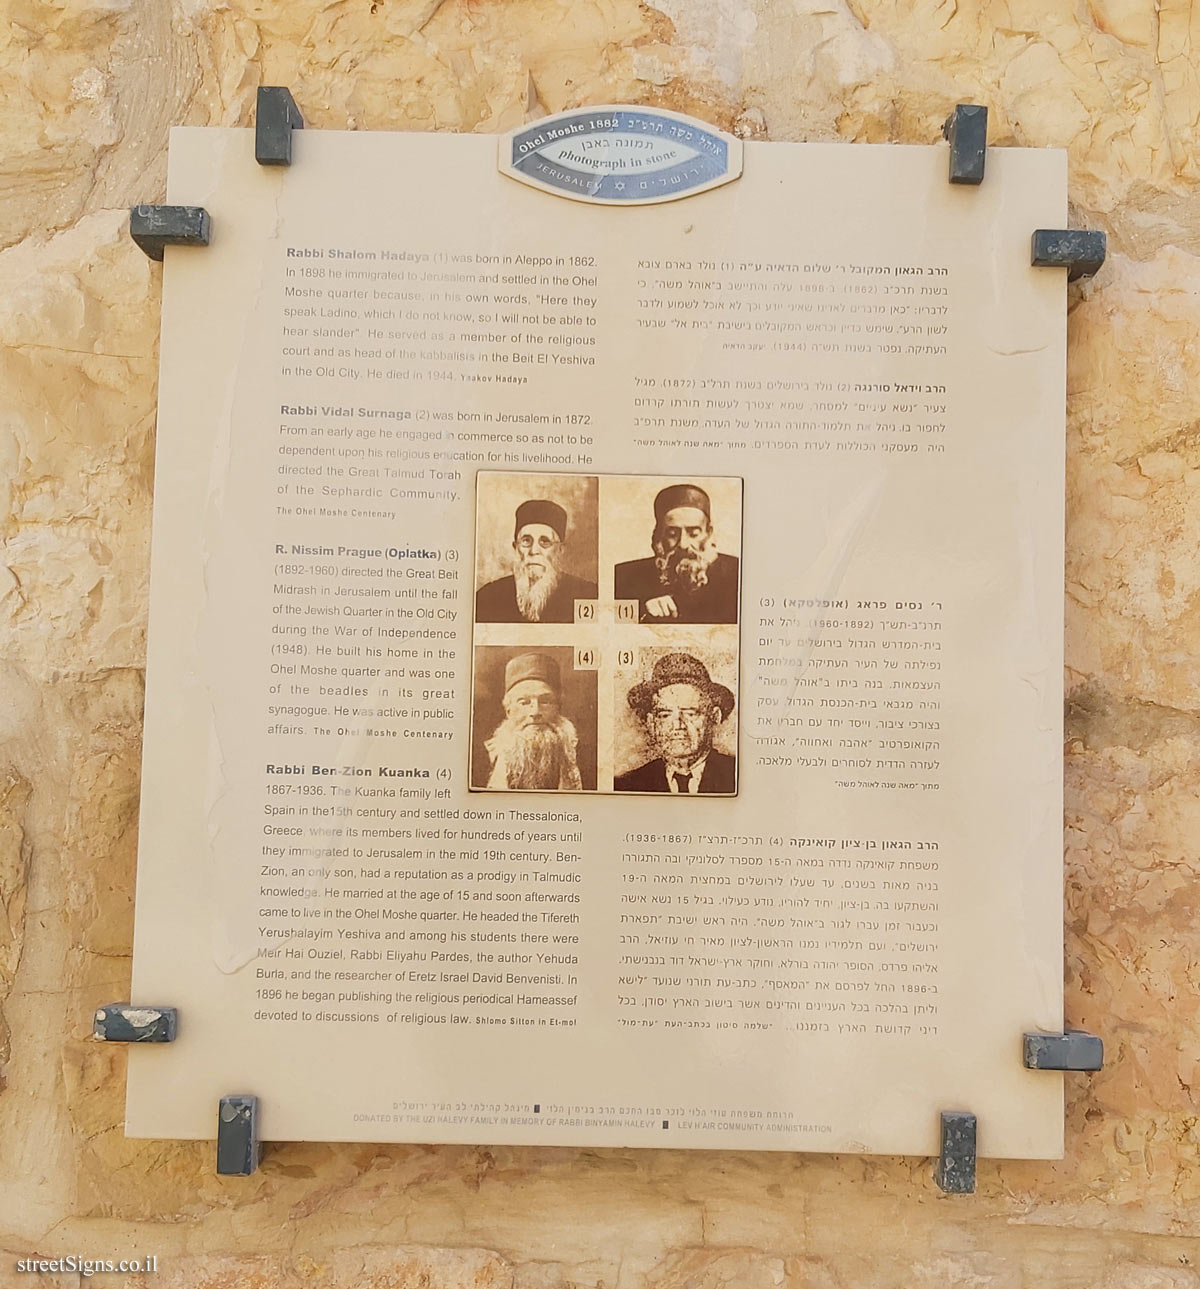 Jerusalem - Photograph in stone - Rabbi Shalom Hadaya and others